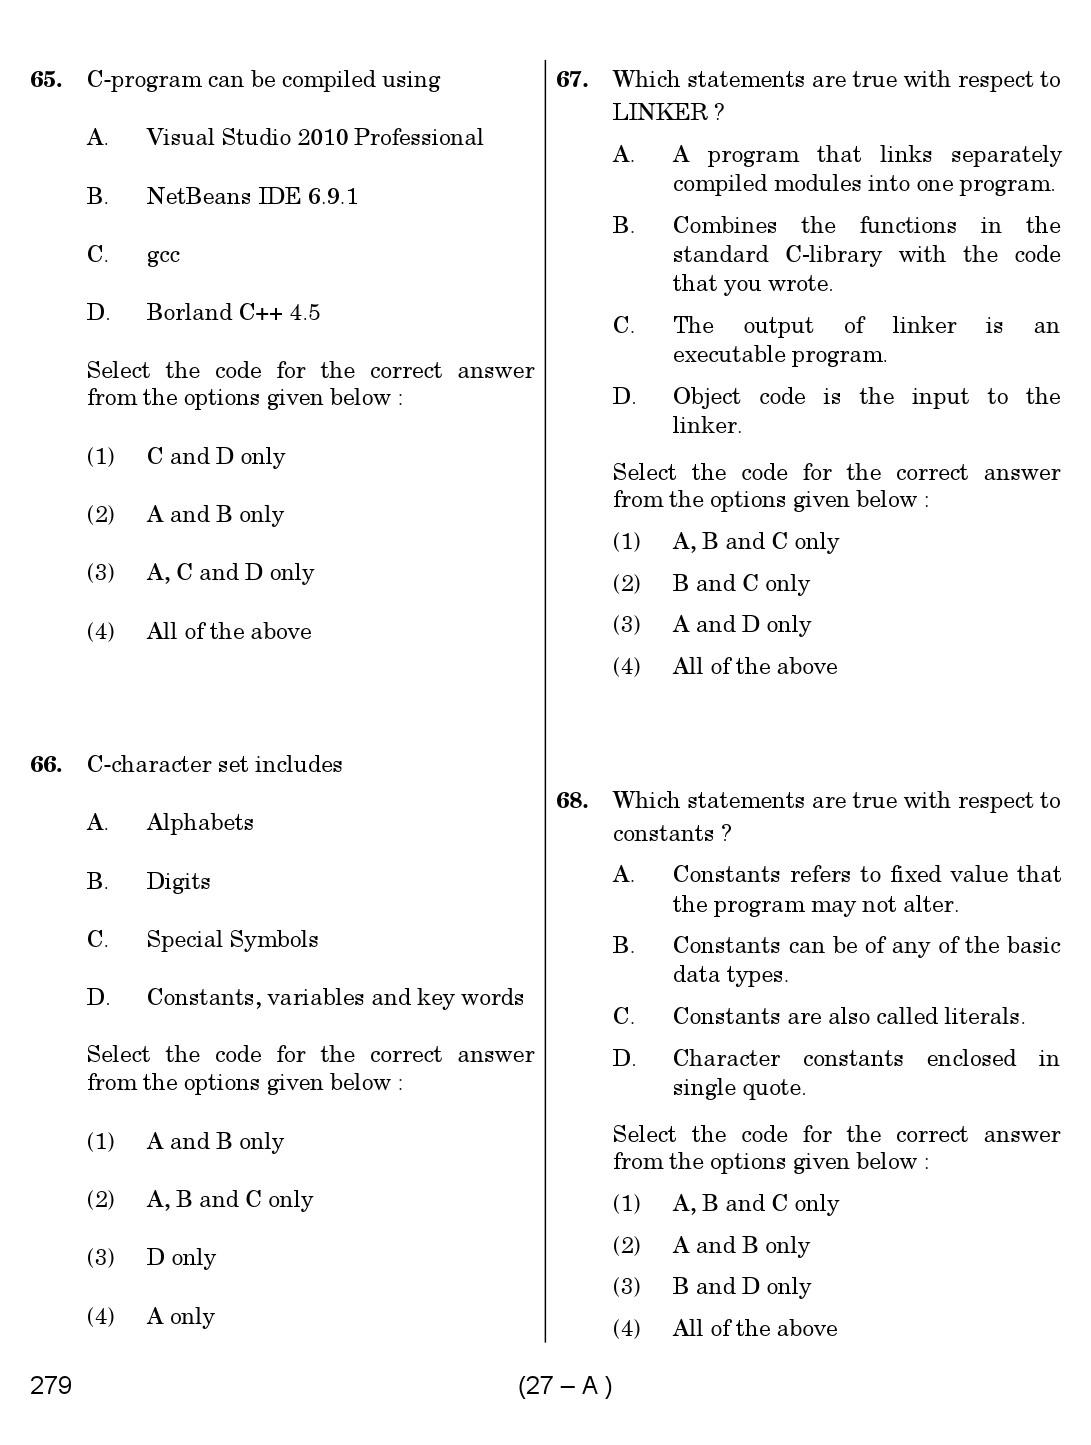 Karnataka PSC Computer Science Teachers Exam Sample Question Paper Subject code 279 27